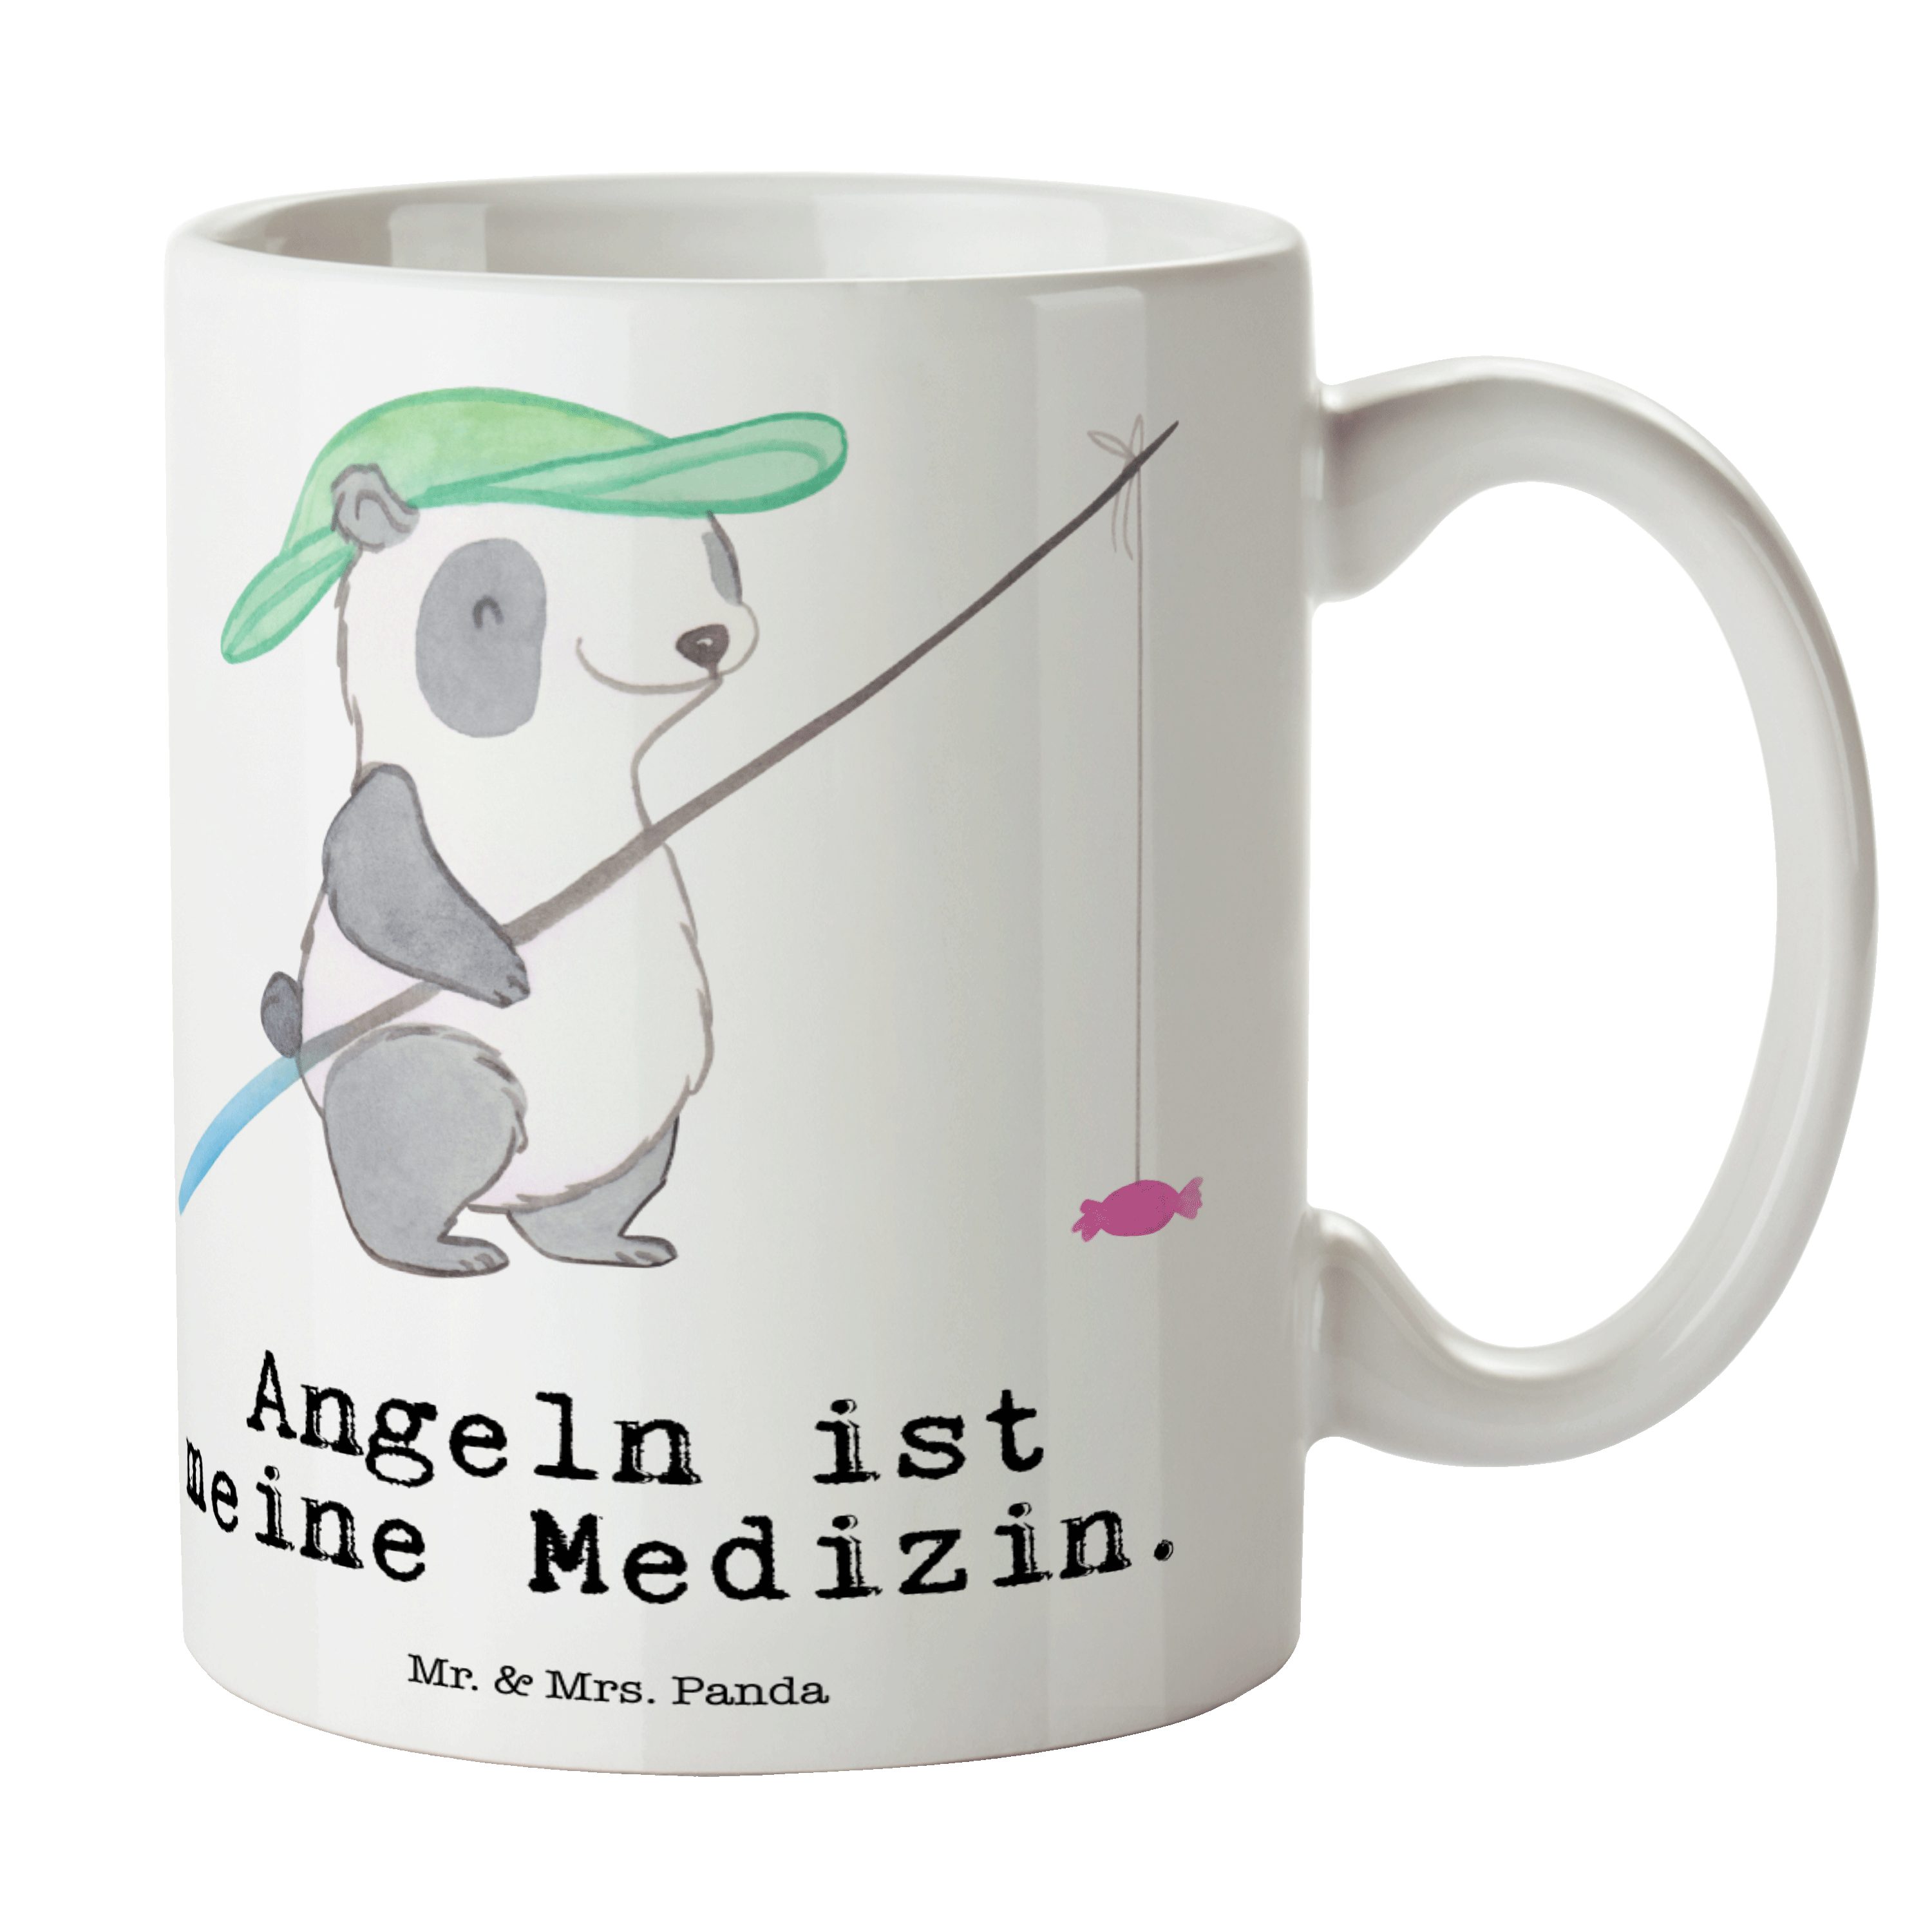 Mr. & Mrs. Panda Tasse Panda Angeln Medizin - Weiß - Geschenk, Kaffeebecher, Keramiktasse, T, Keramik